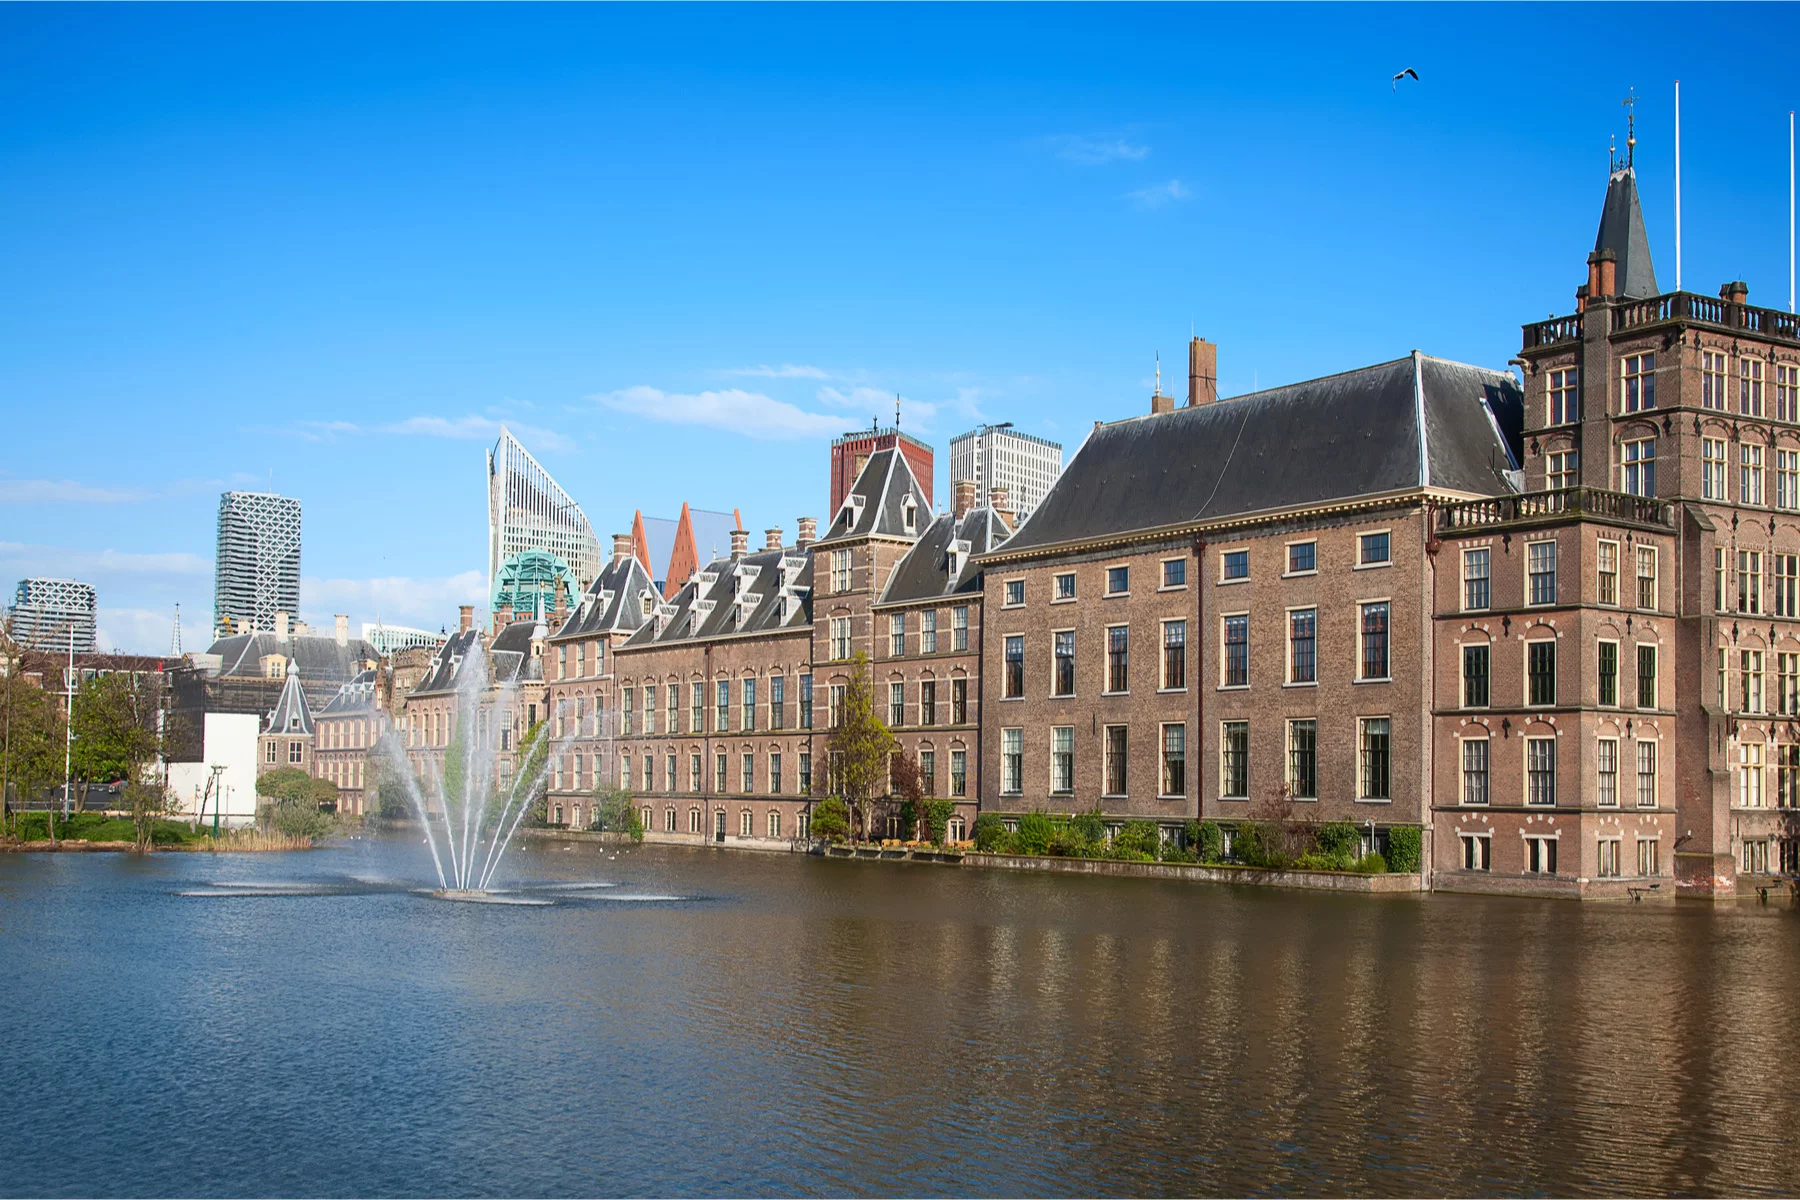 the Dutch parliament in The Hague